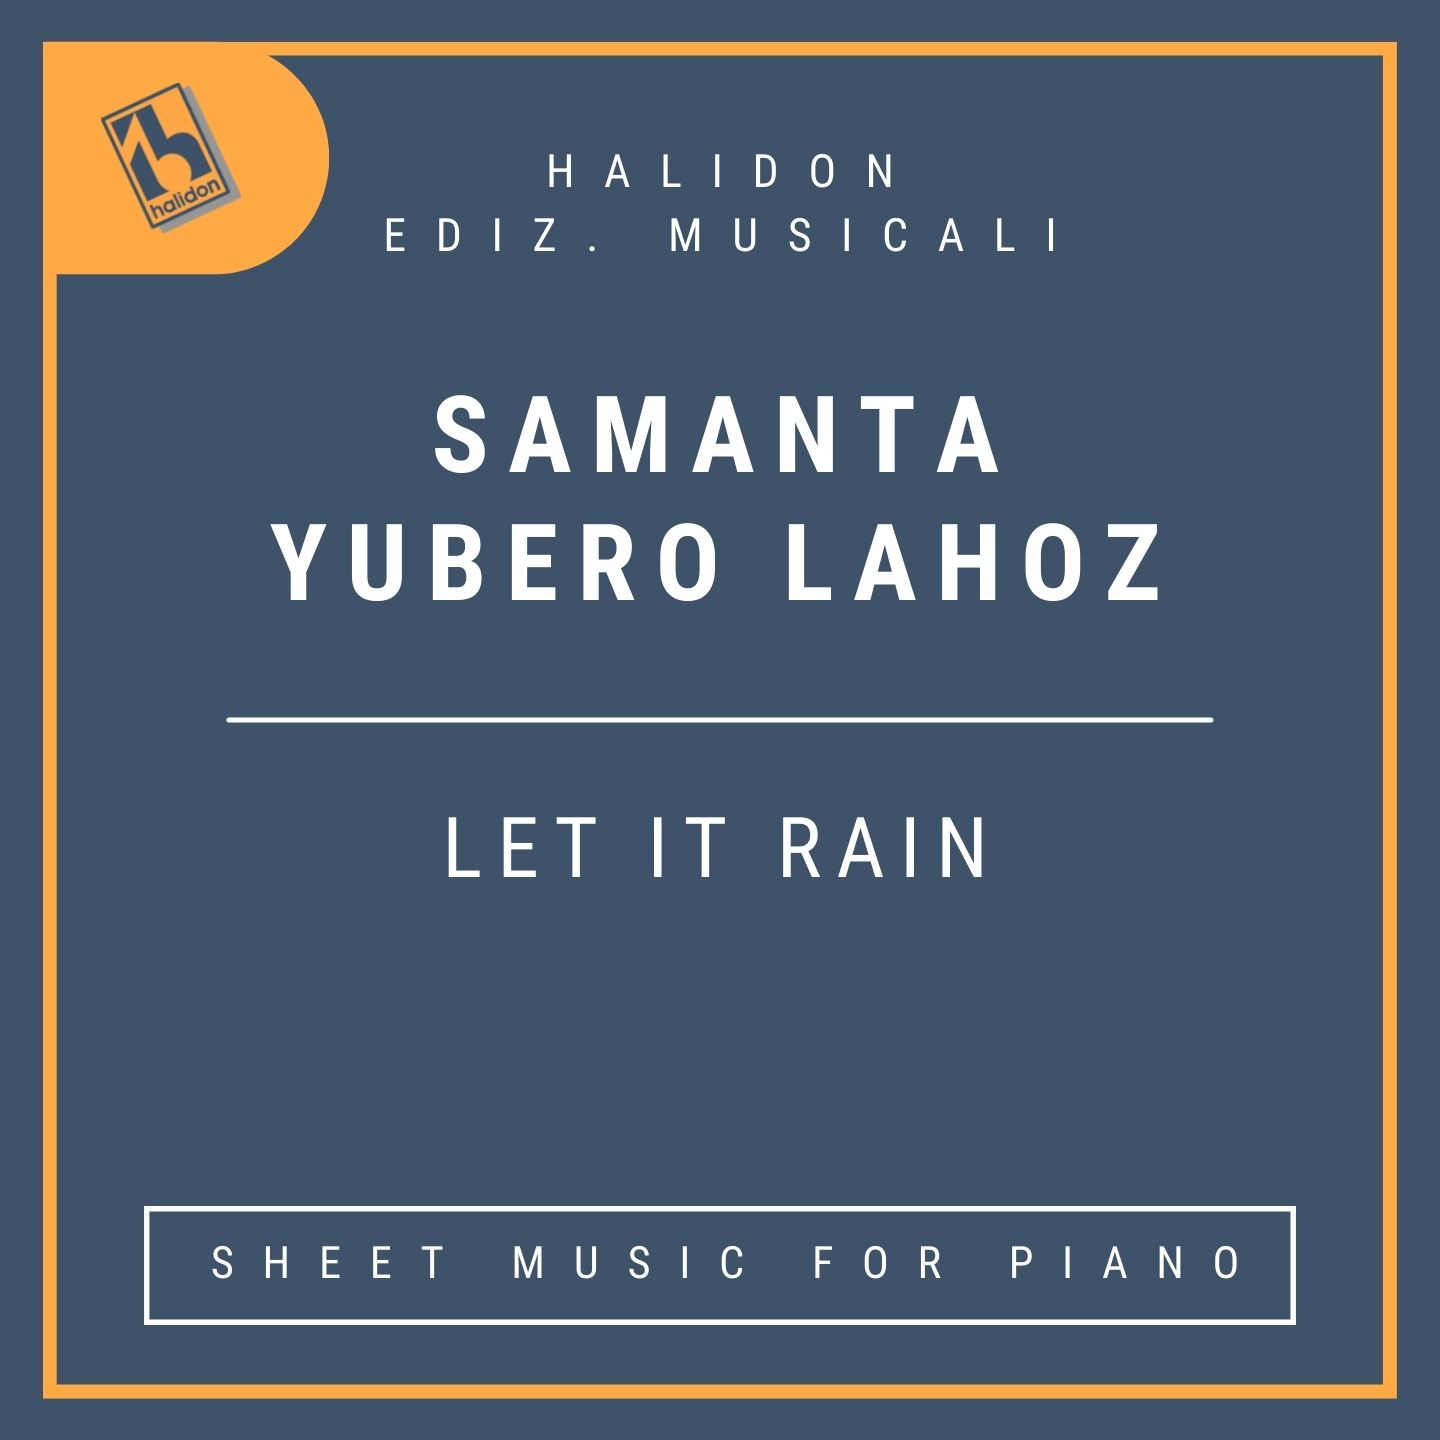 Samanta Yubero Lahoz - Let it rain (pianoforte)